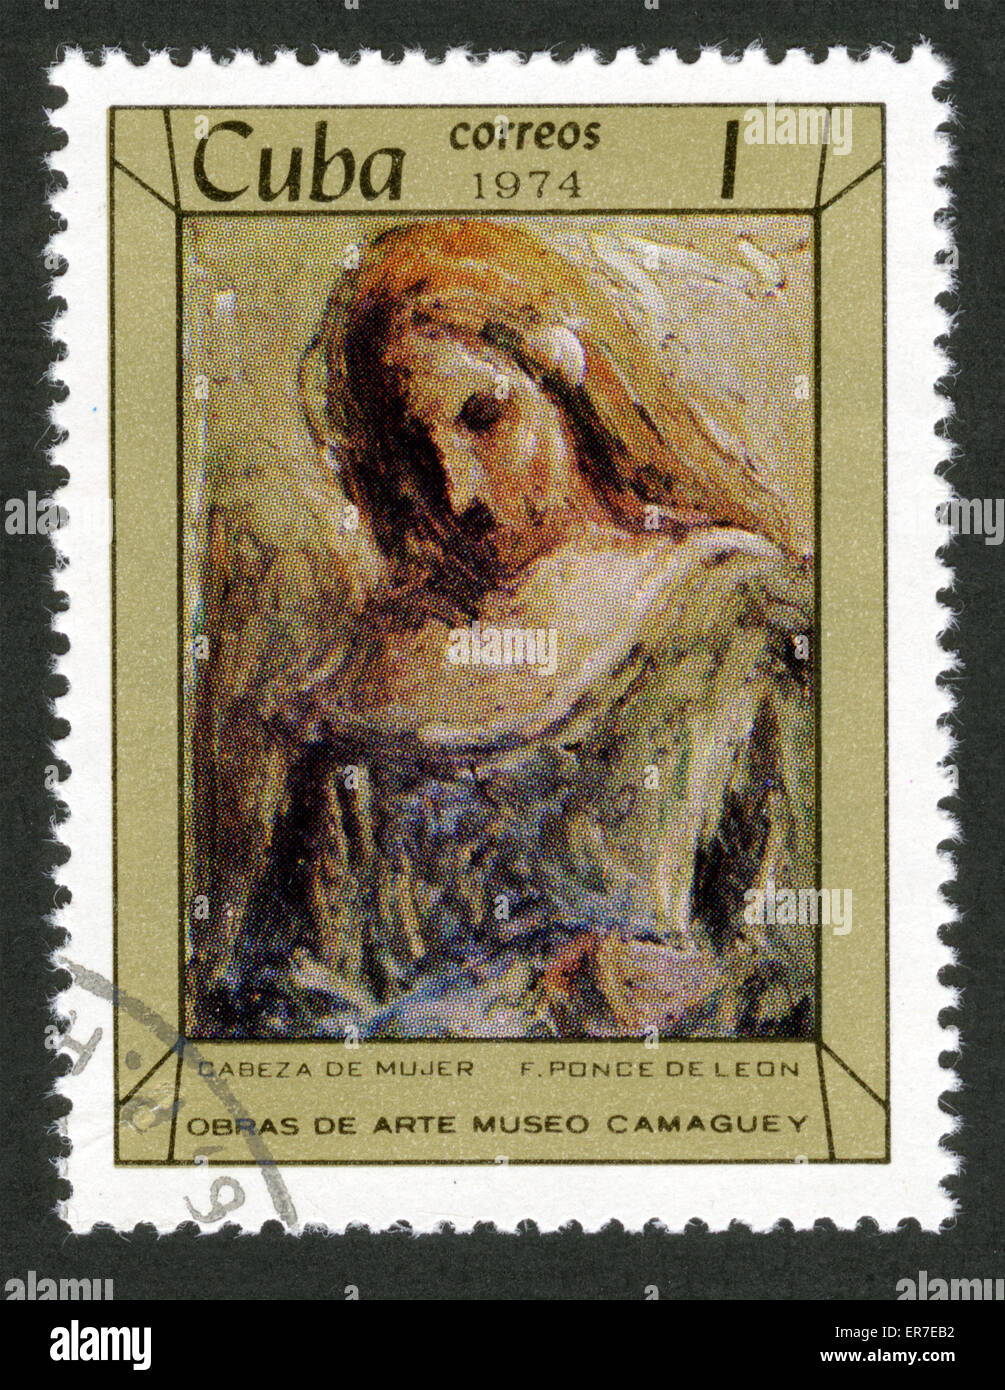 Cuba,1974 year,post mark,stamp,Cuban art, Painting Stock Photo